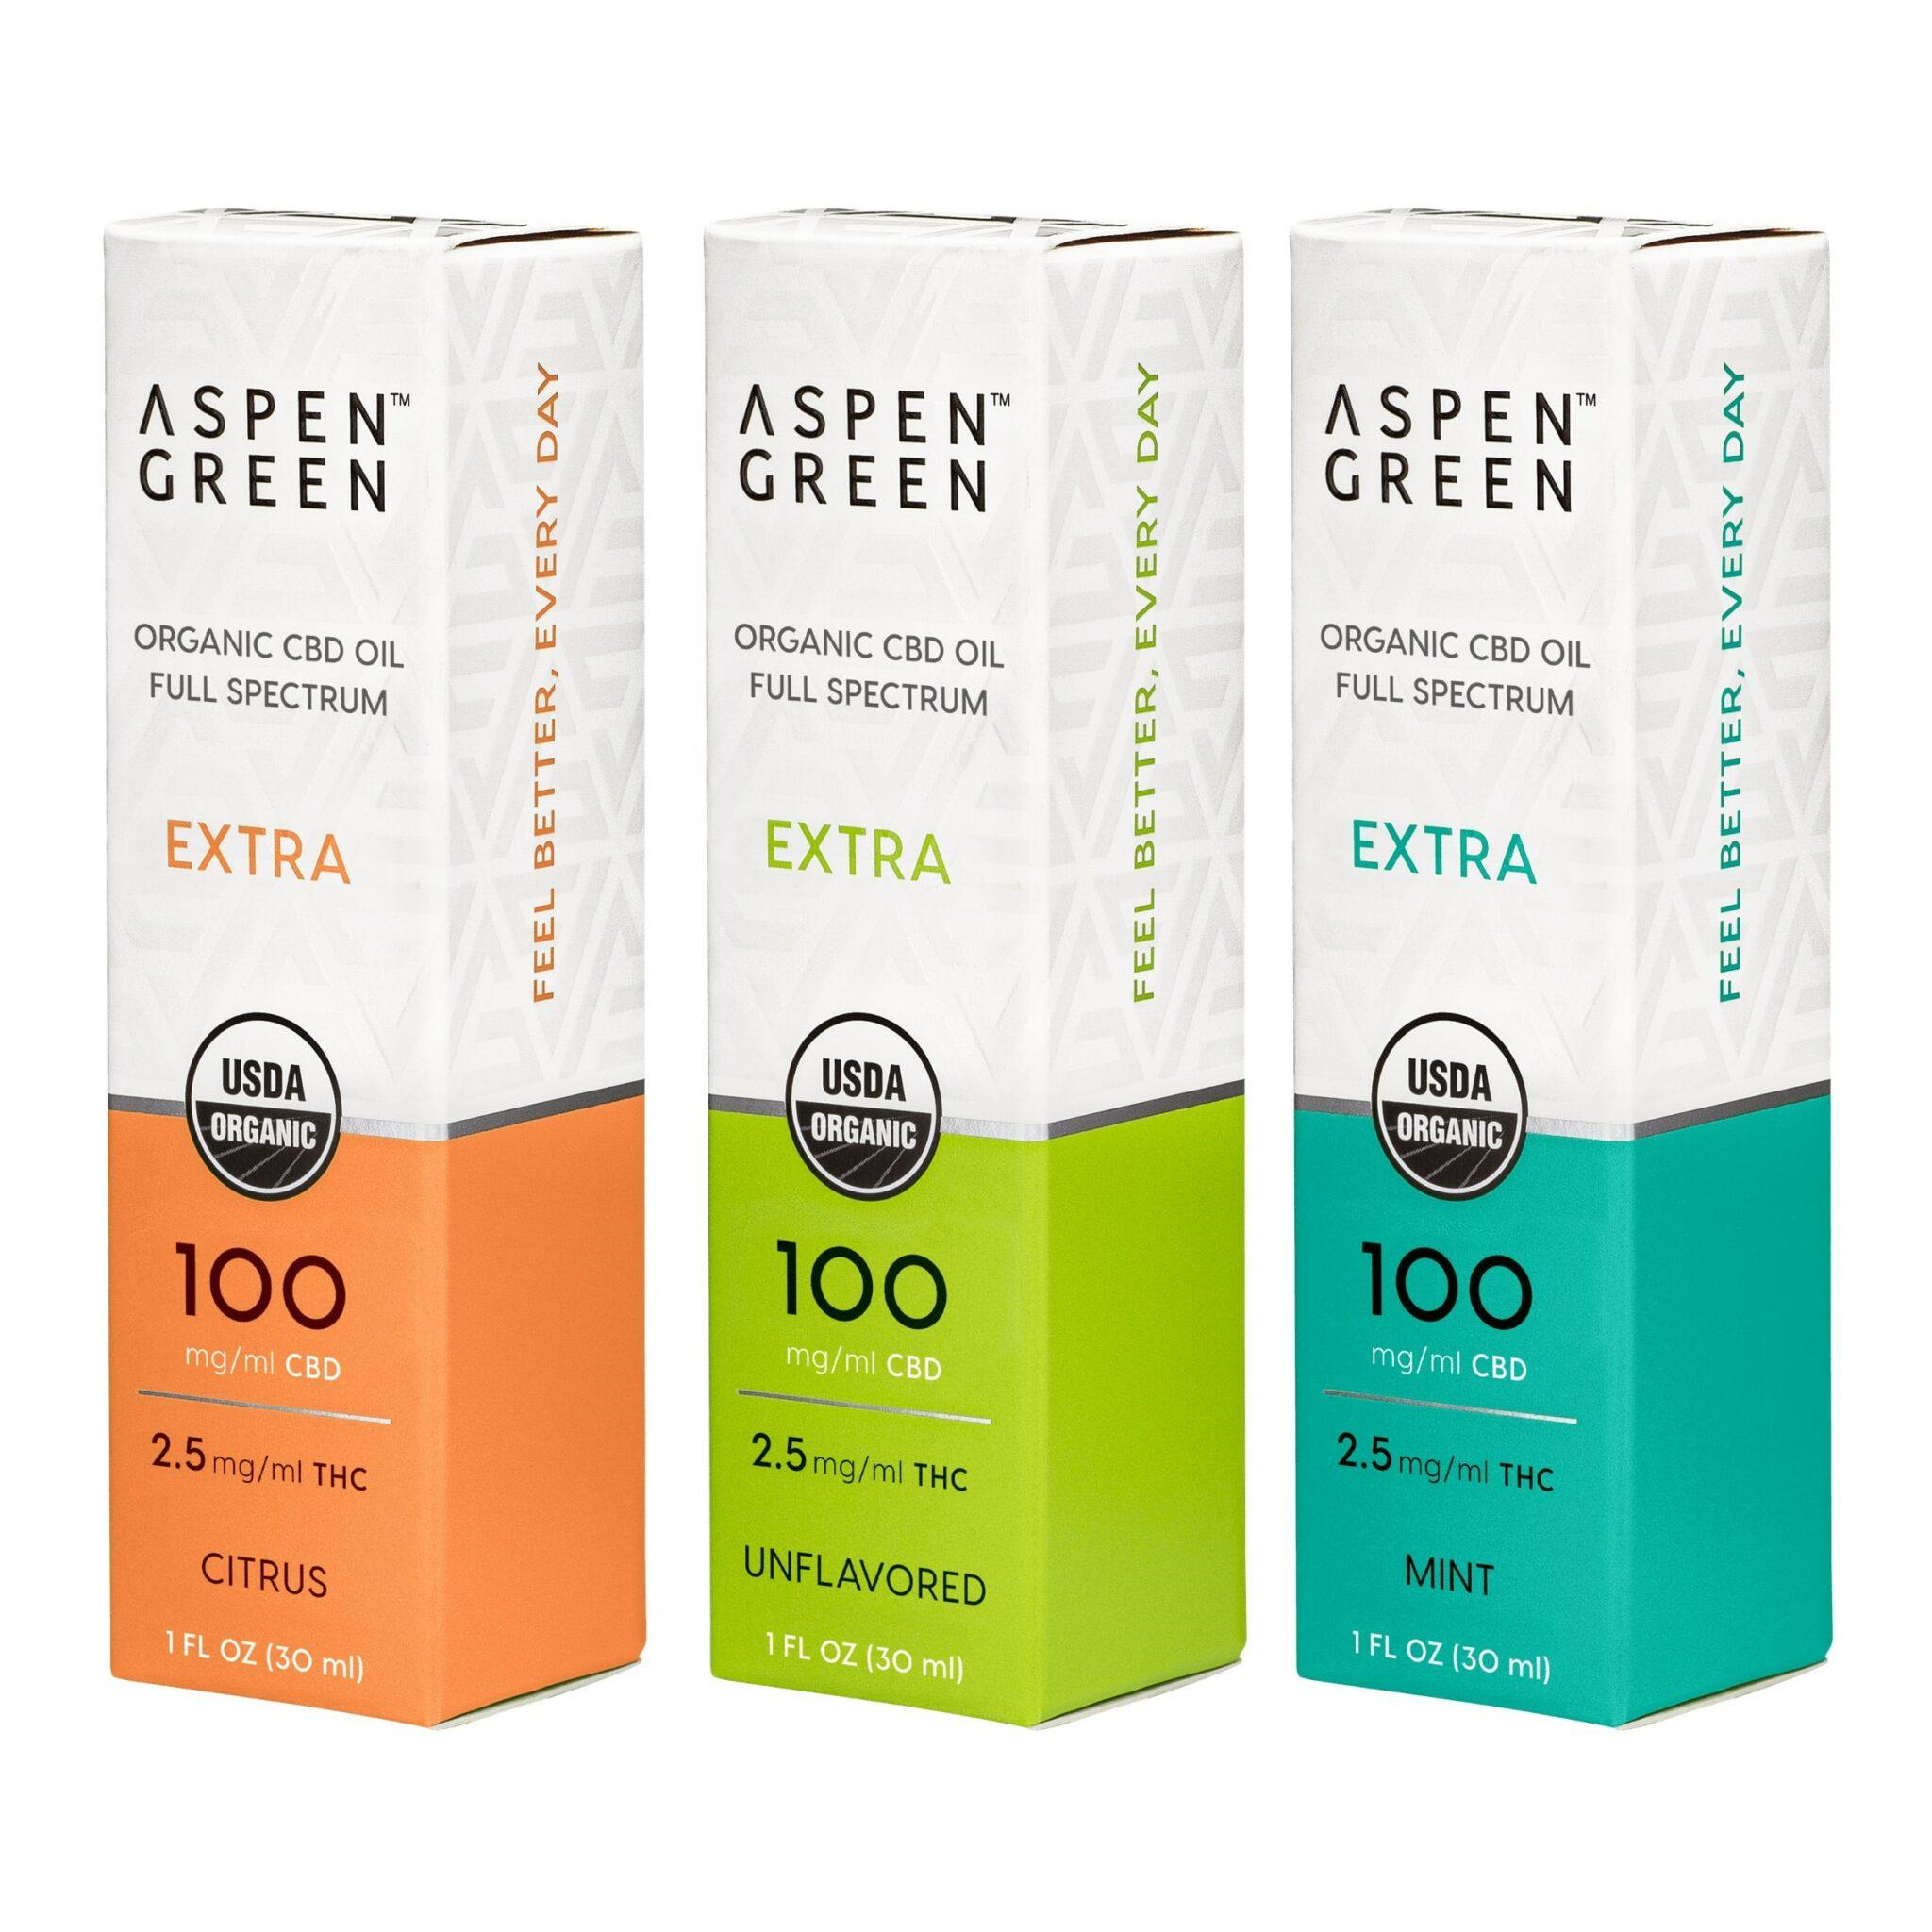 Aspen Green Affiliate Program Product Image